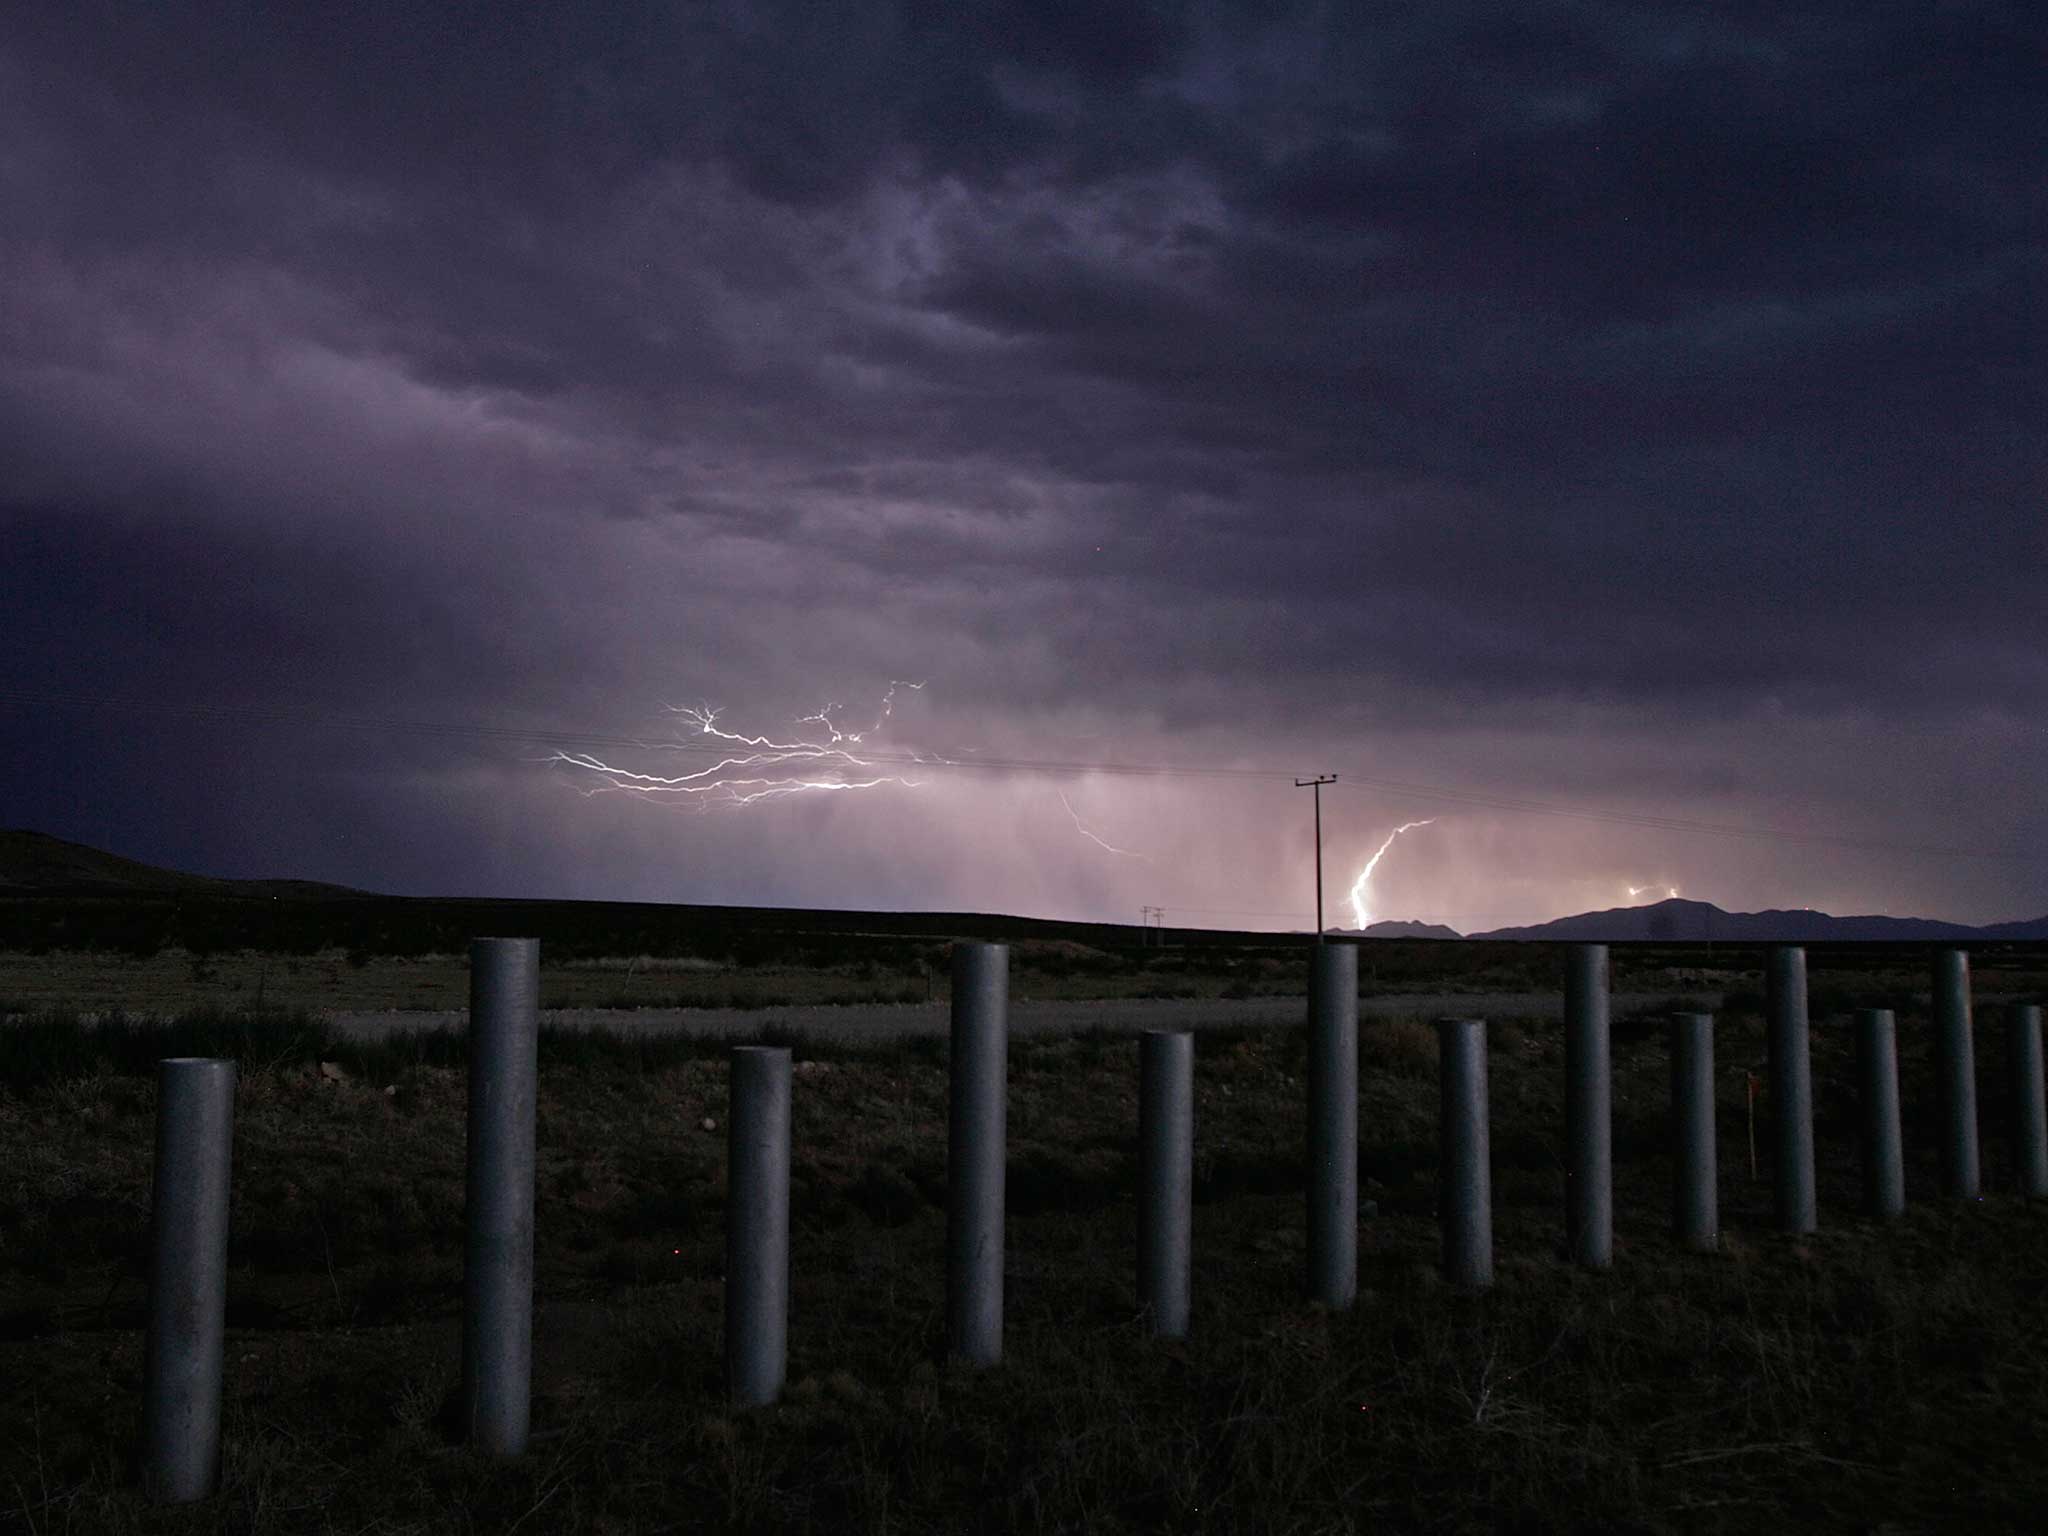 Lightning runs across the skies of Mexico, near the US border